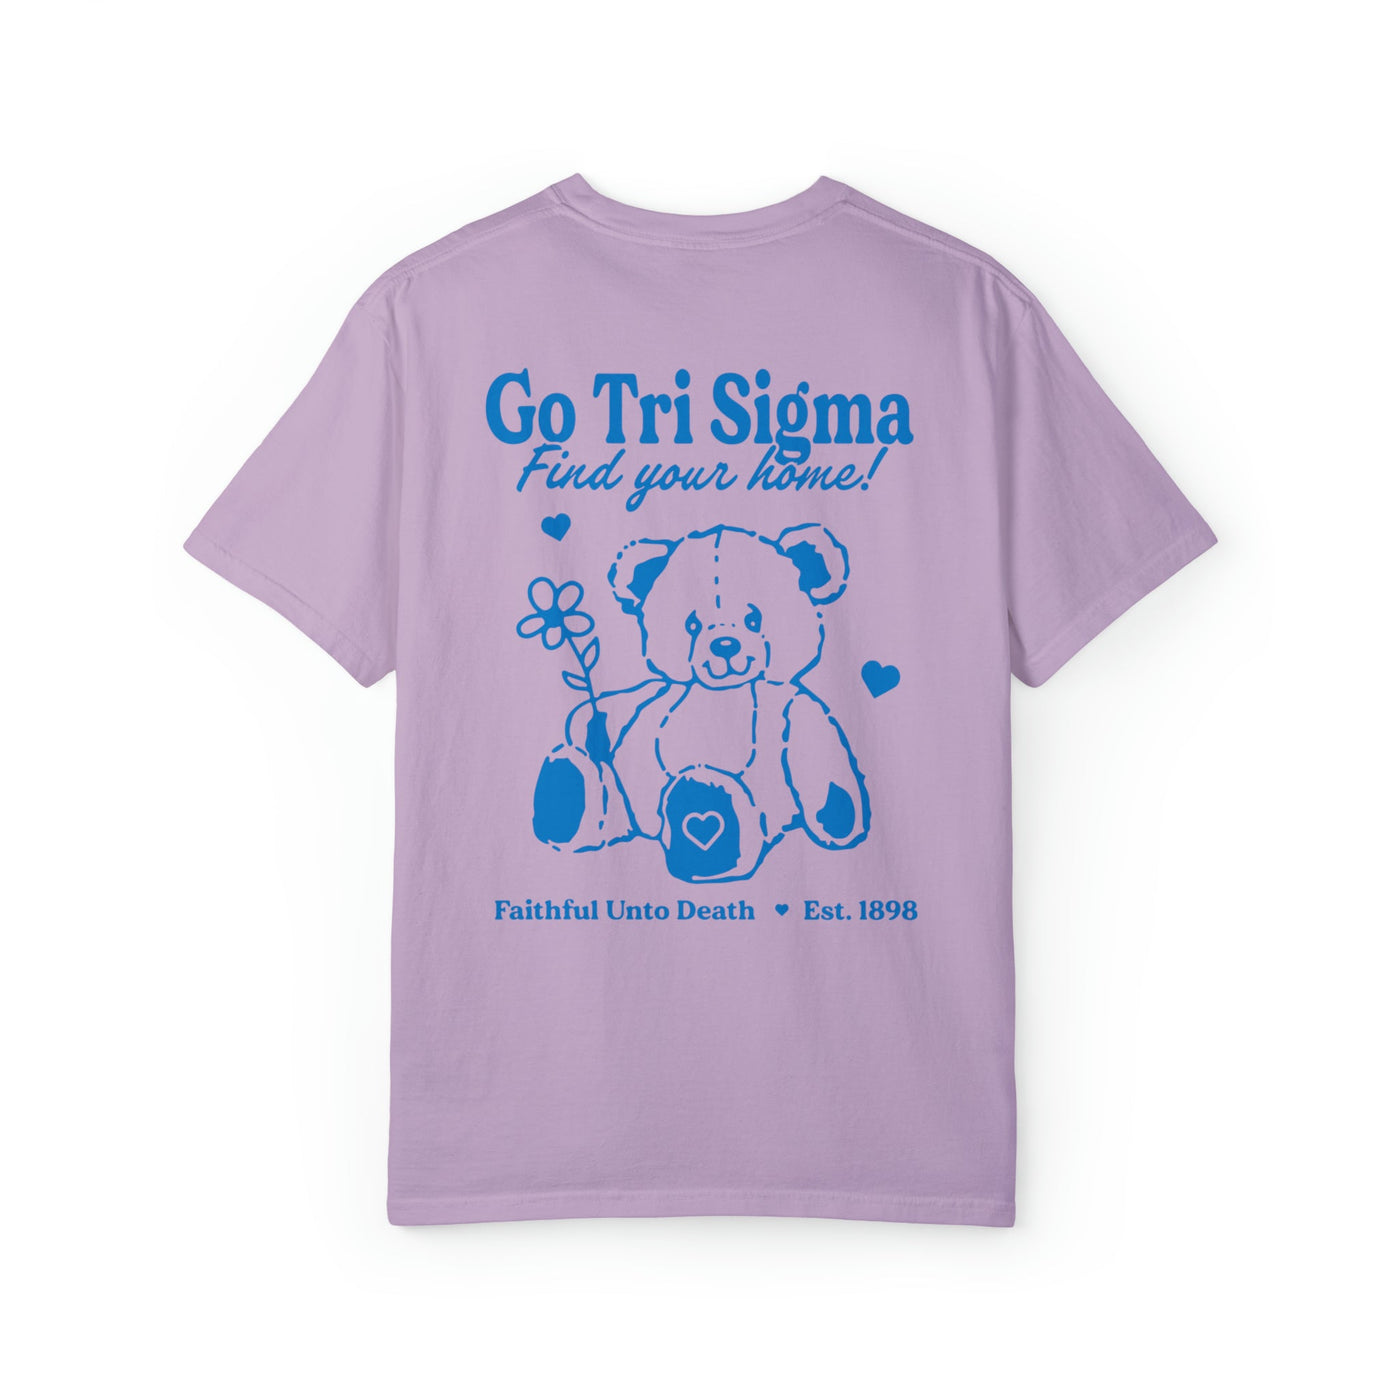 Sigma Sigma Sigma Teddy Bear Sorority T-shirt